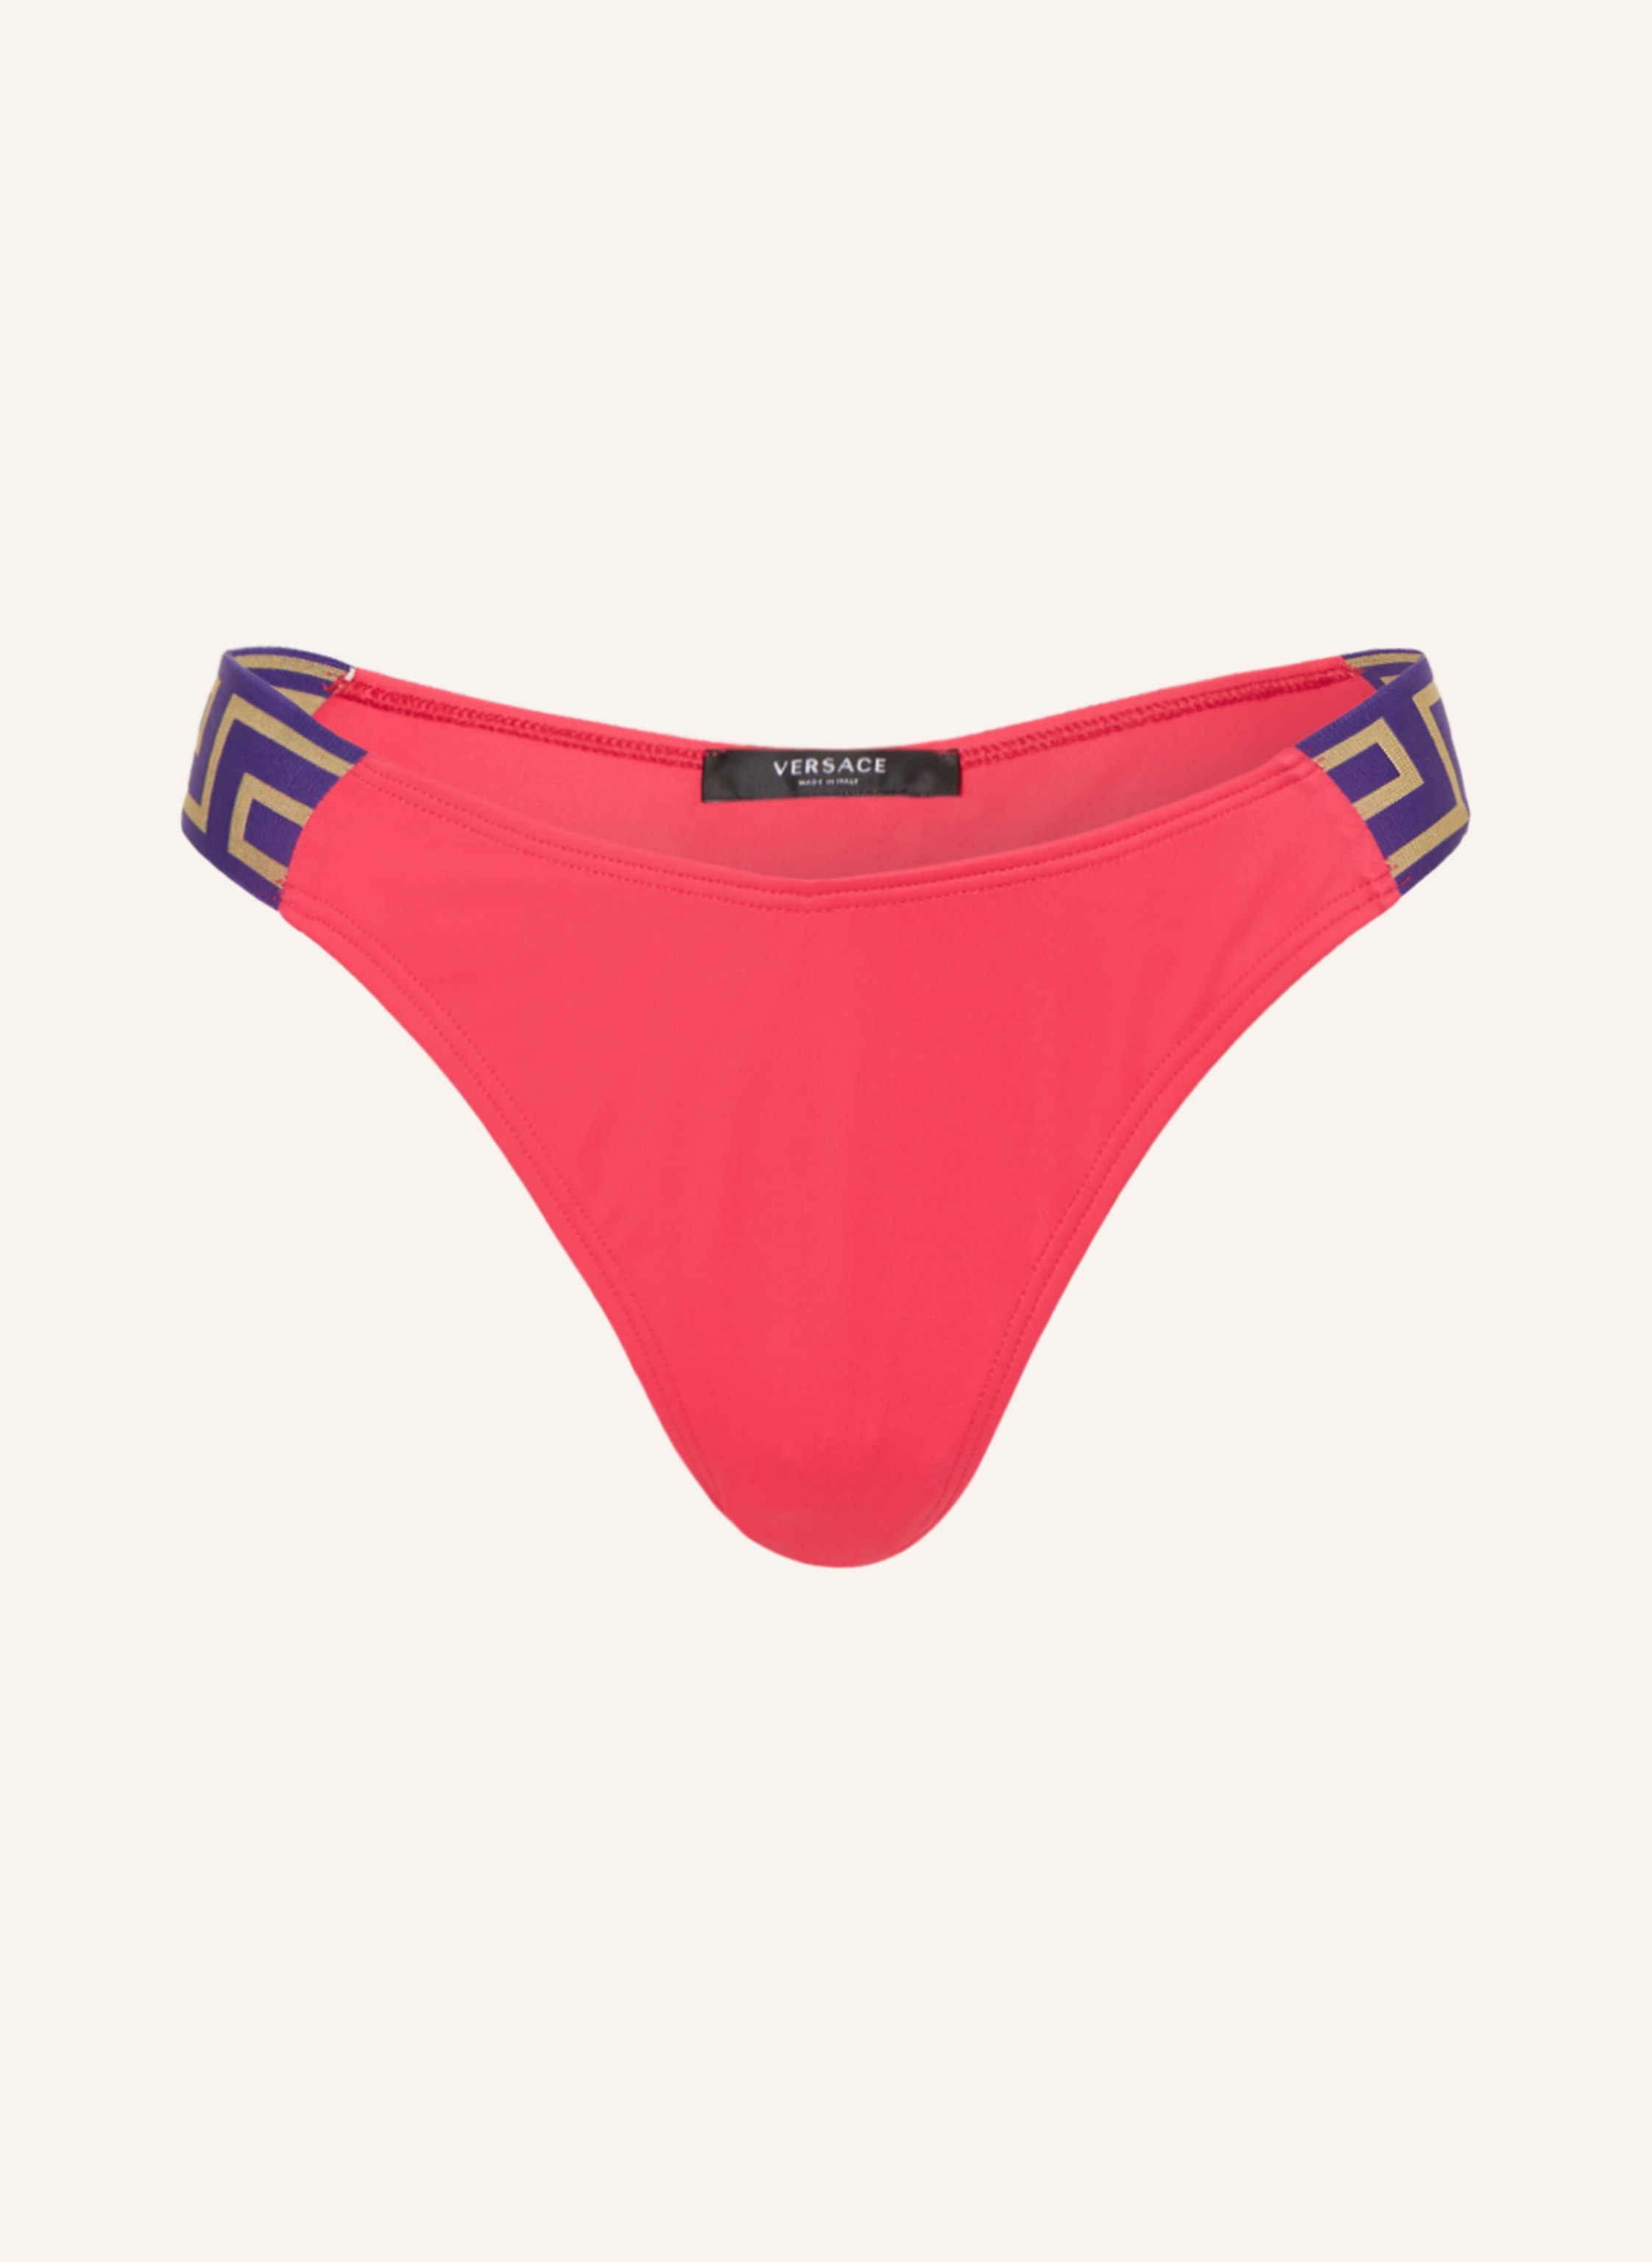 Pink Reversible Bikini Bottom by Versace Underwear on Sale